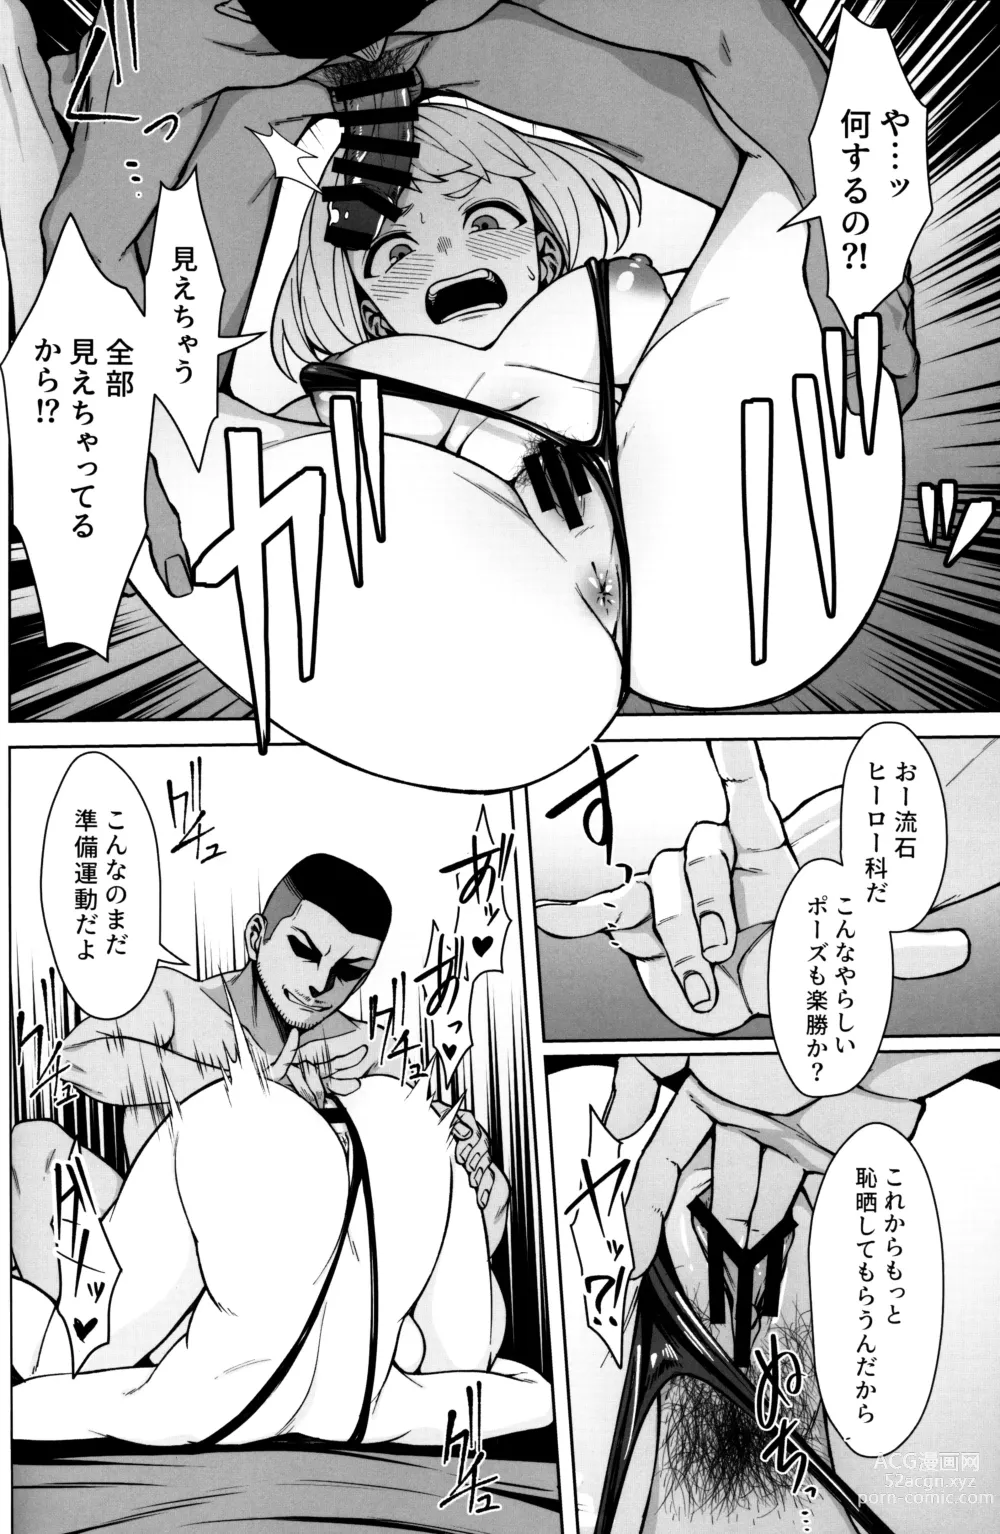 Page 7 of doujinshi Pathetic Heroism